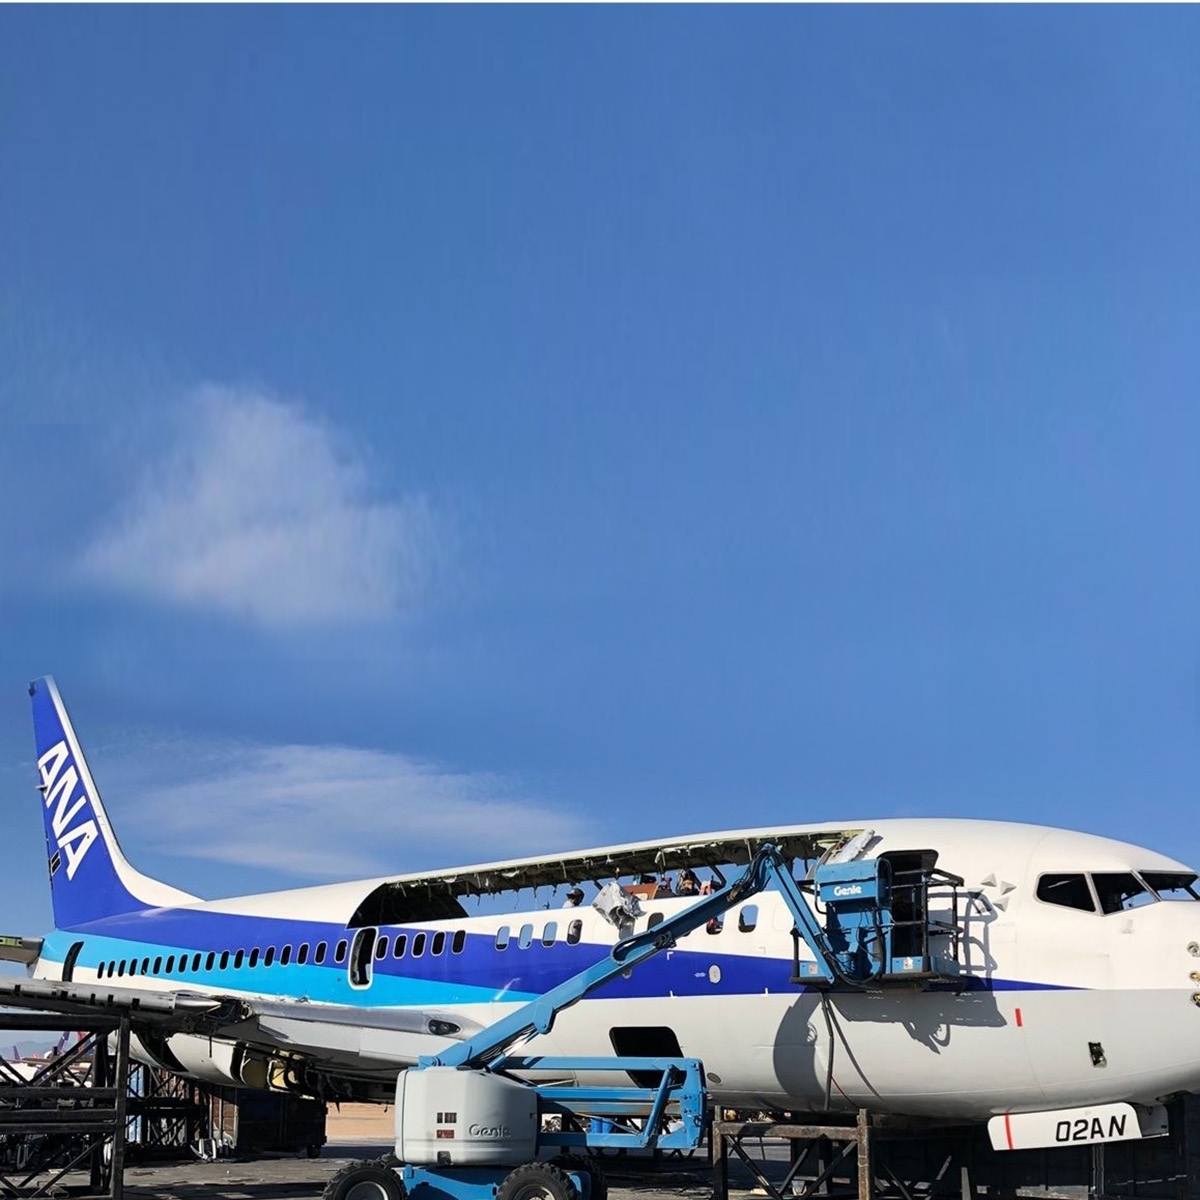 Aviationtag ANA - Boeing 737 - JA02AN Blue, White